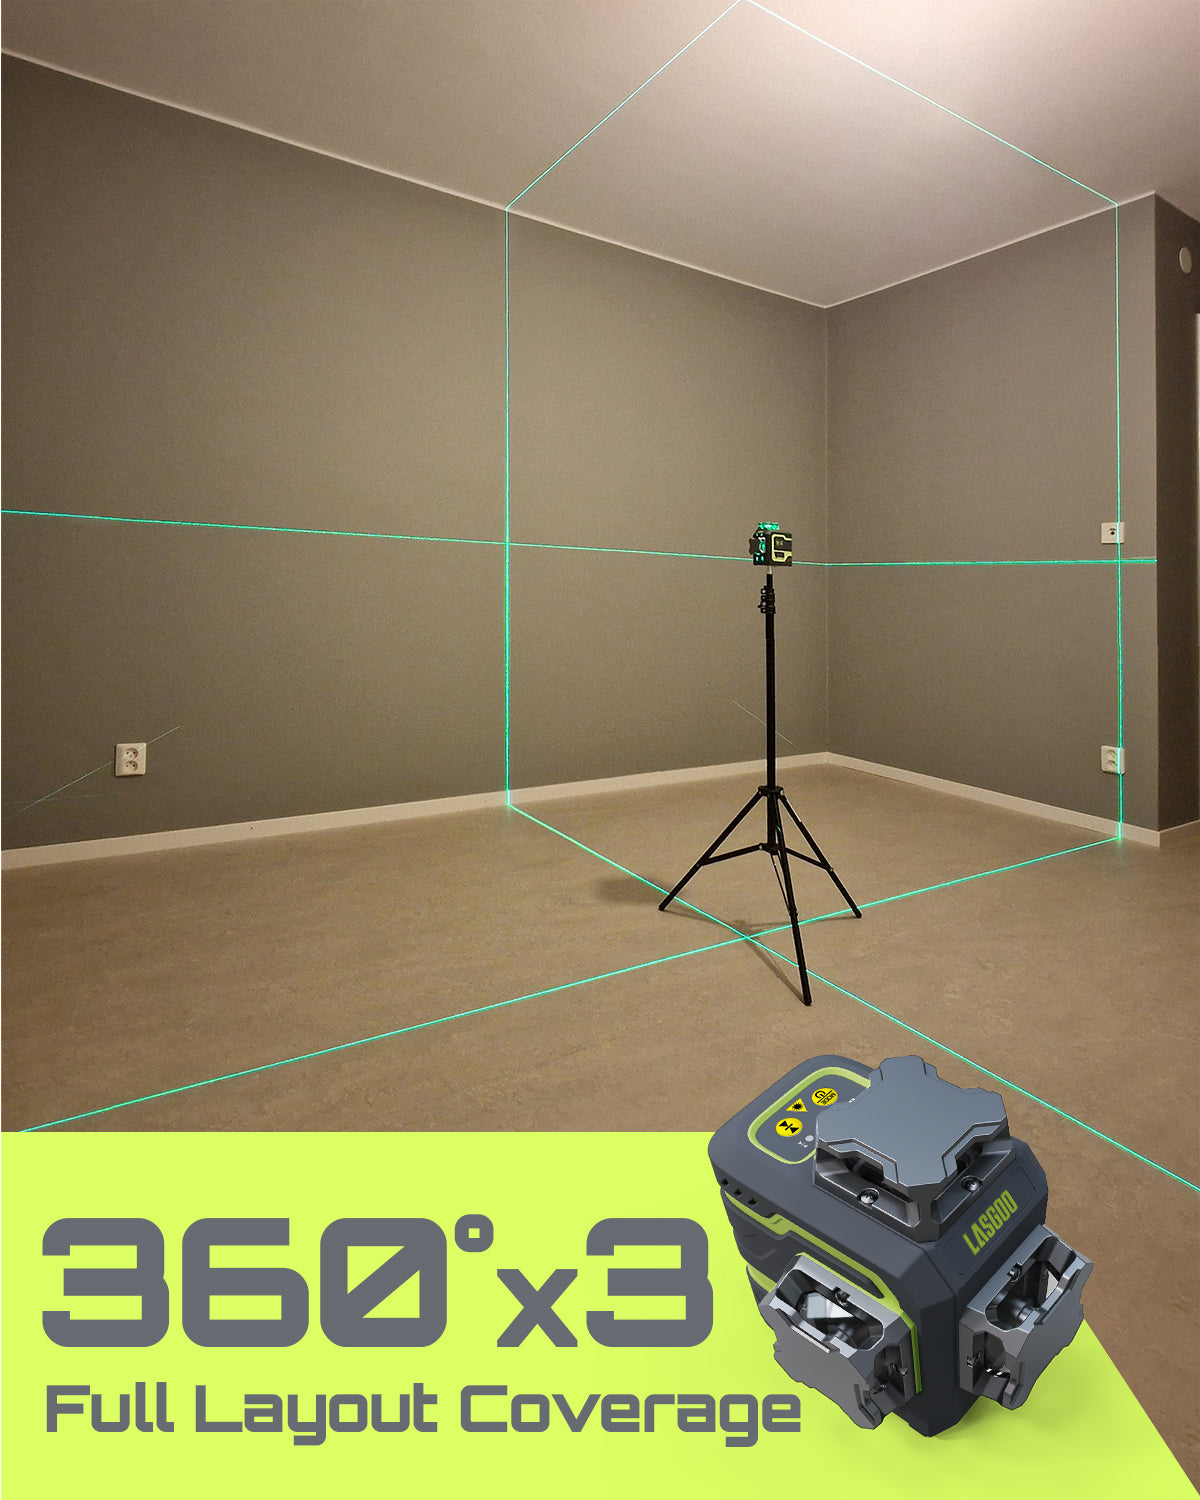 LasGoo LG-3D-3x360° Green Laser Level